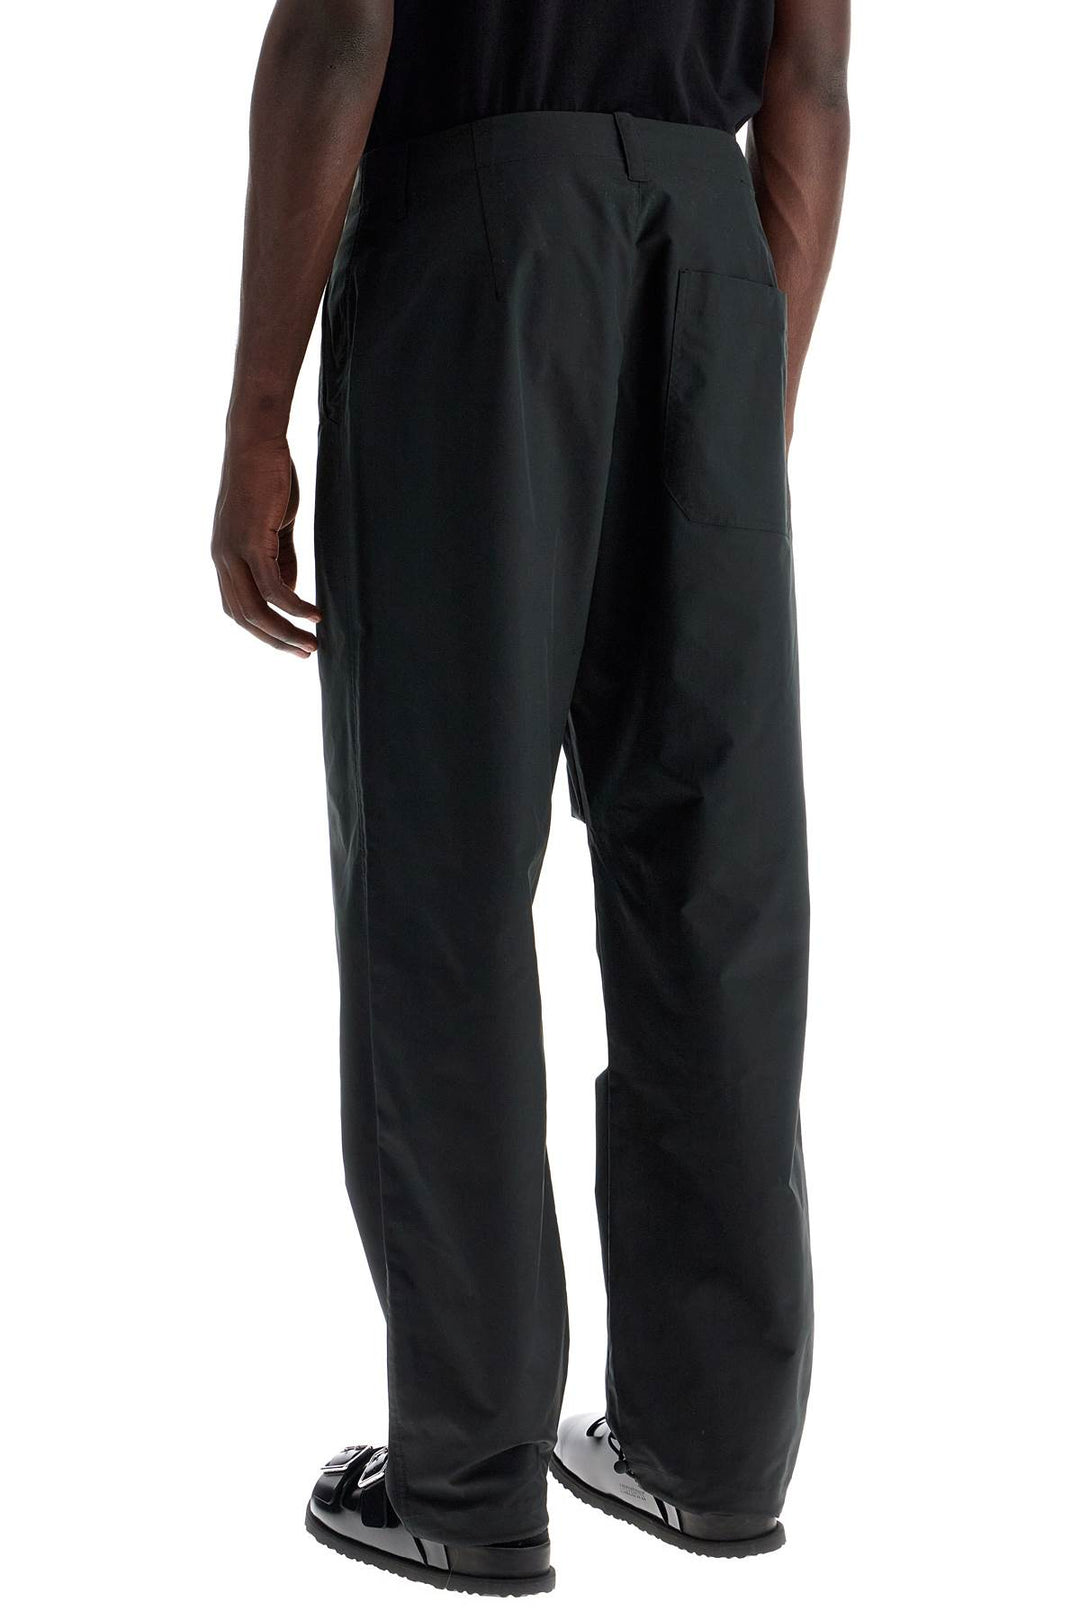 A.P.C. Mashi Technical Fabric Pants   Black